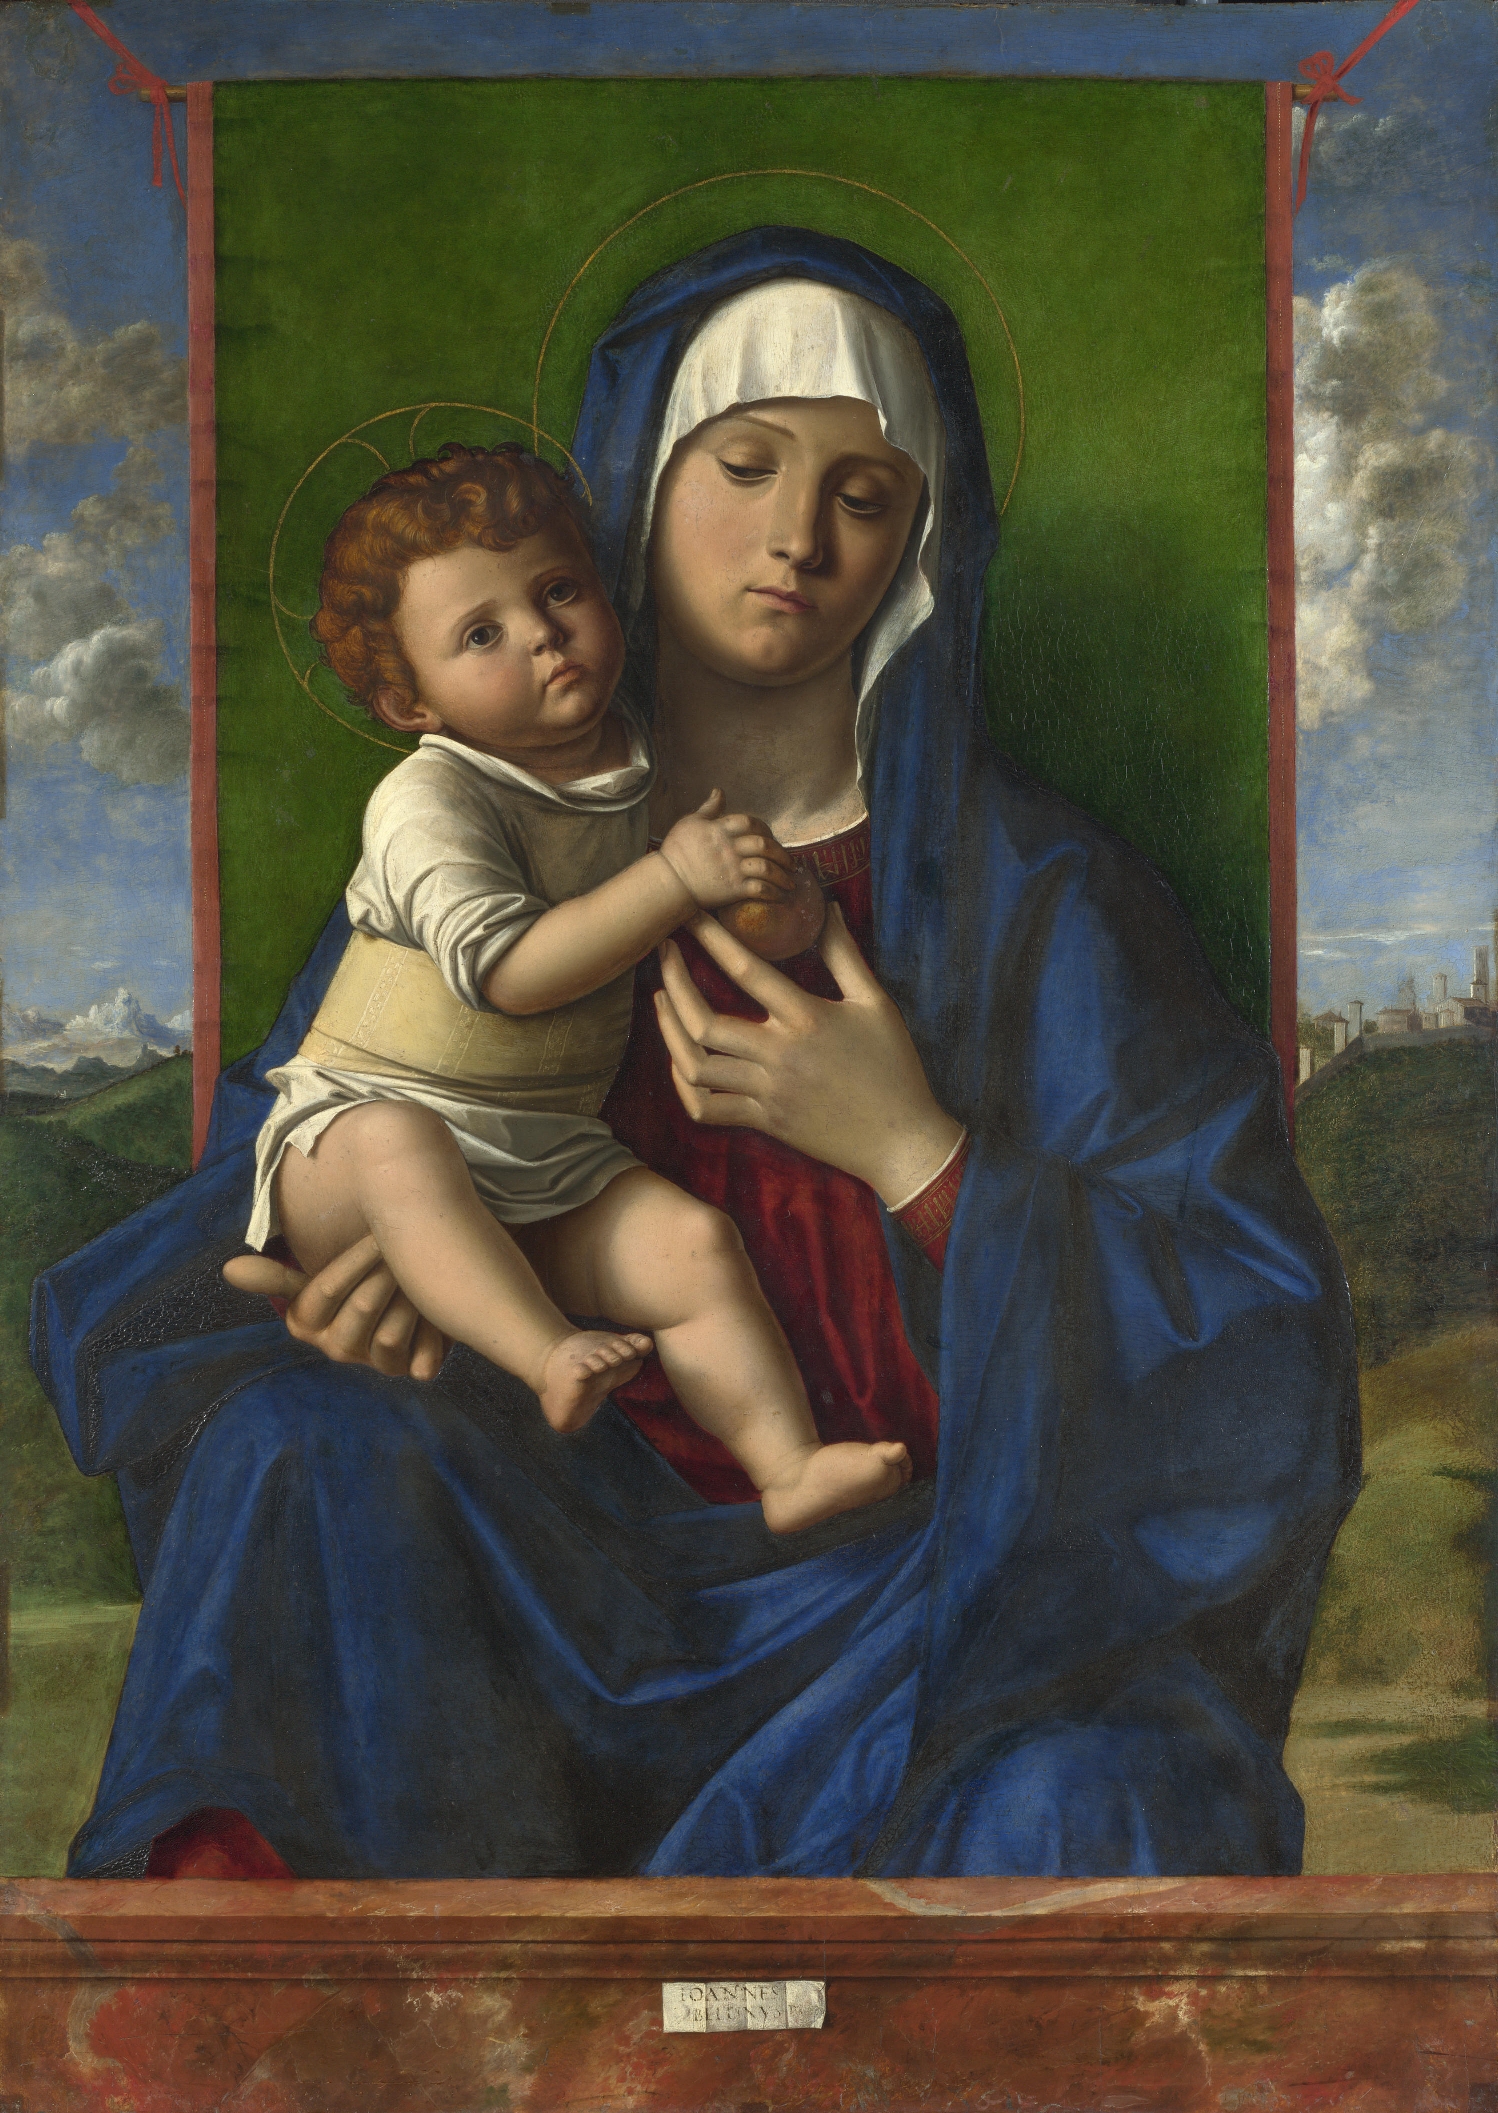 HAYDN, J.M. - Giovanni Bellini - The Virgin and Child